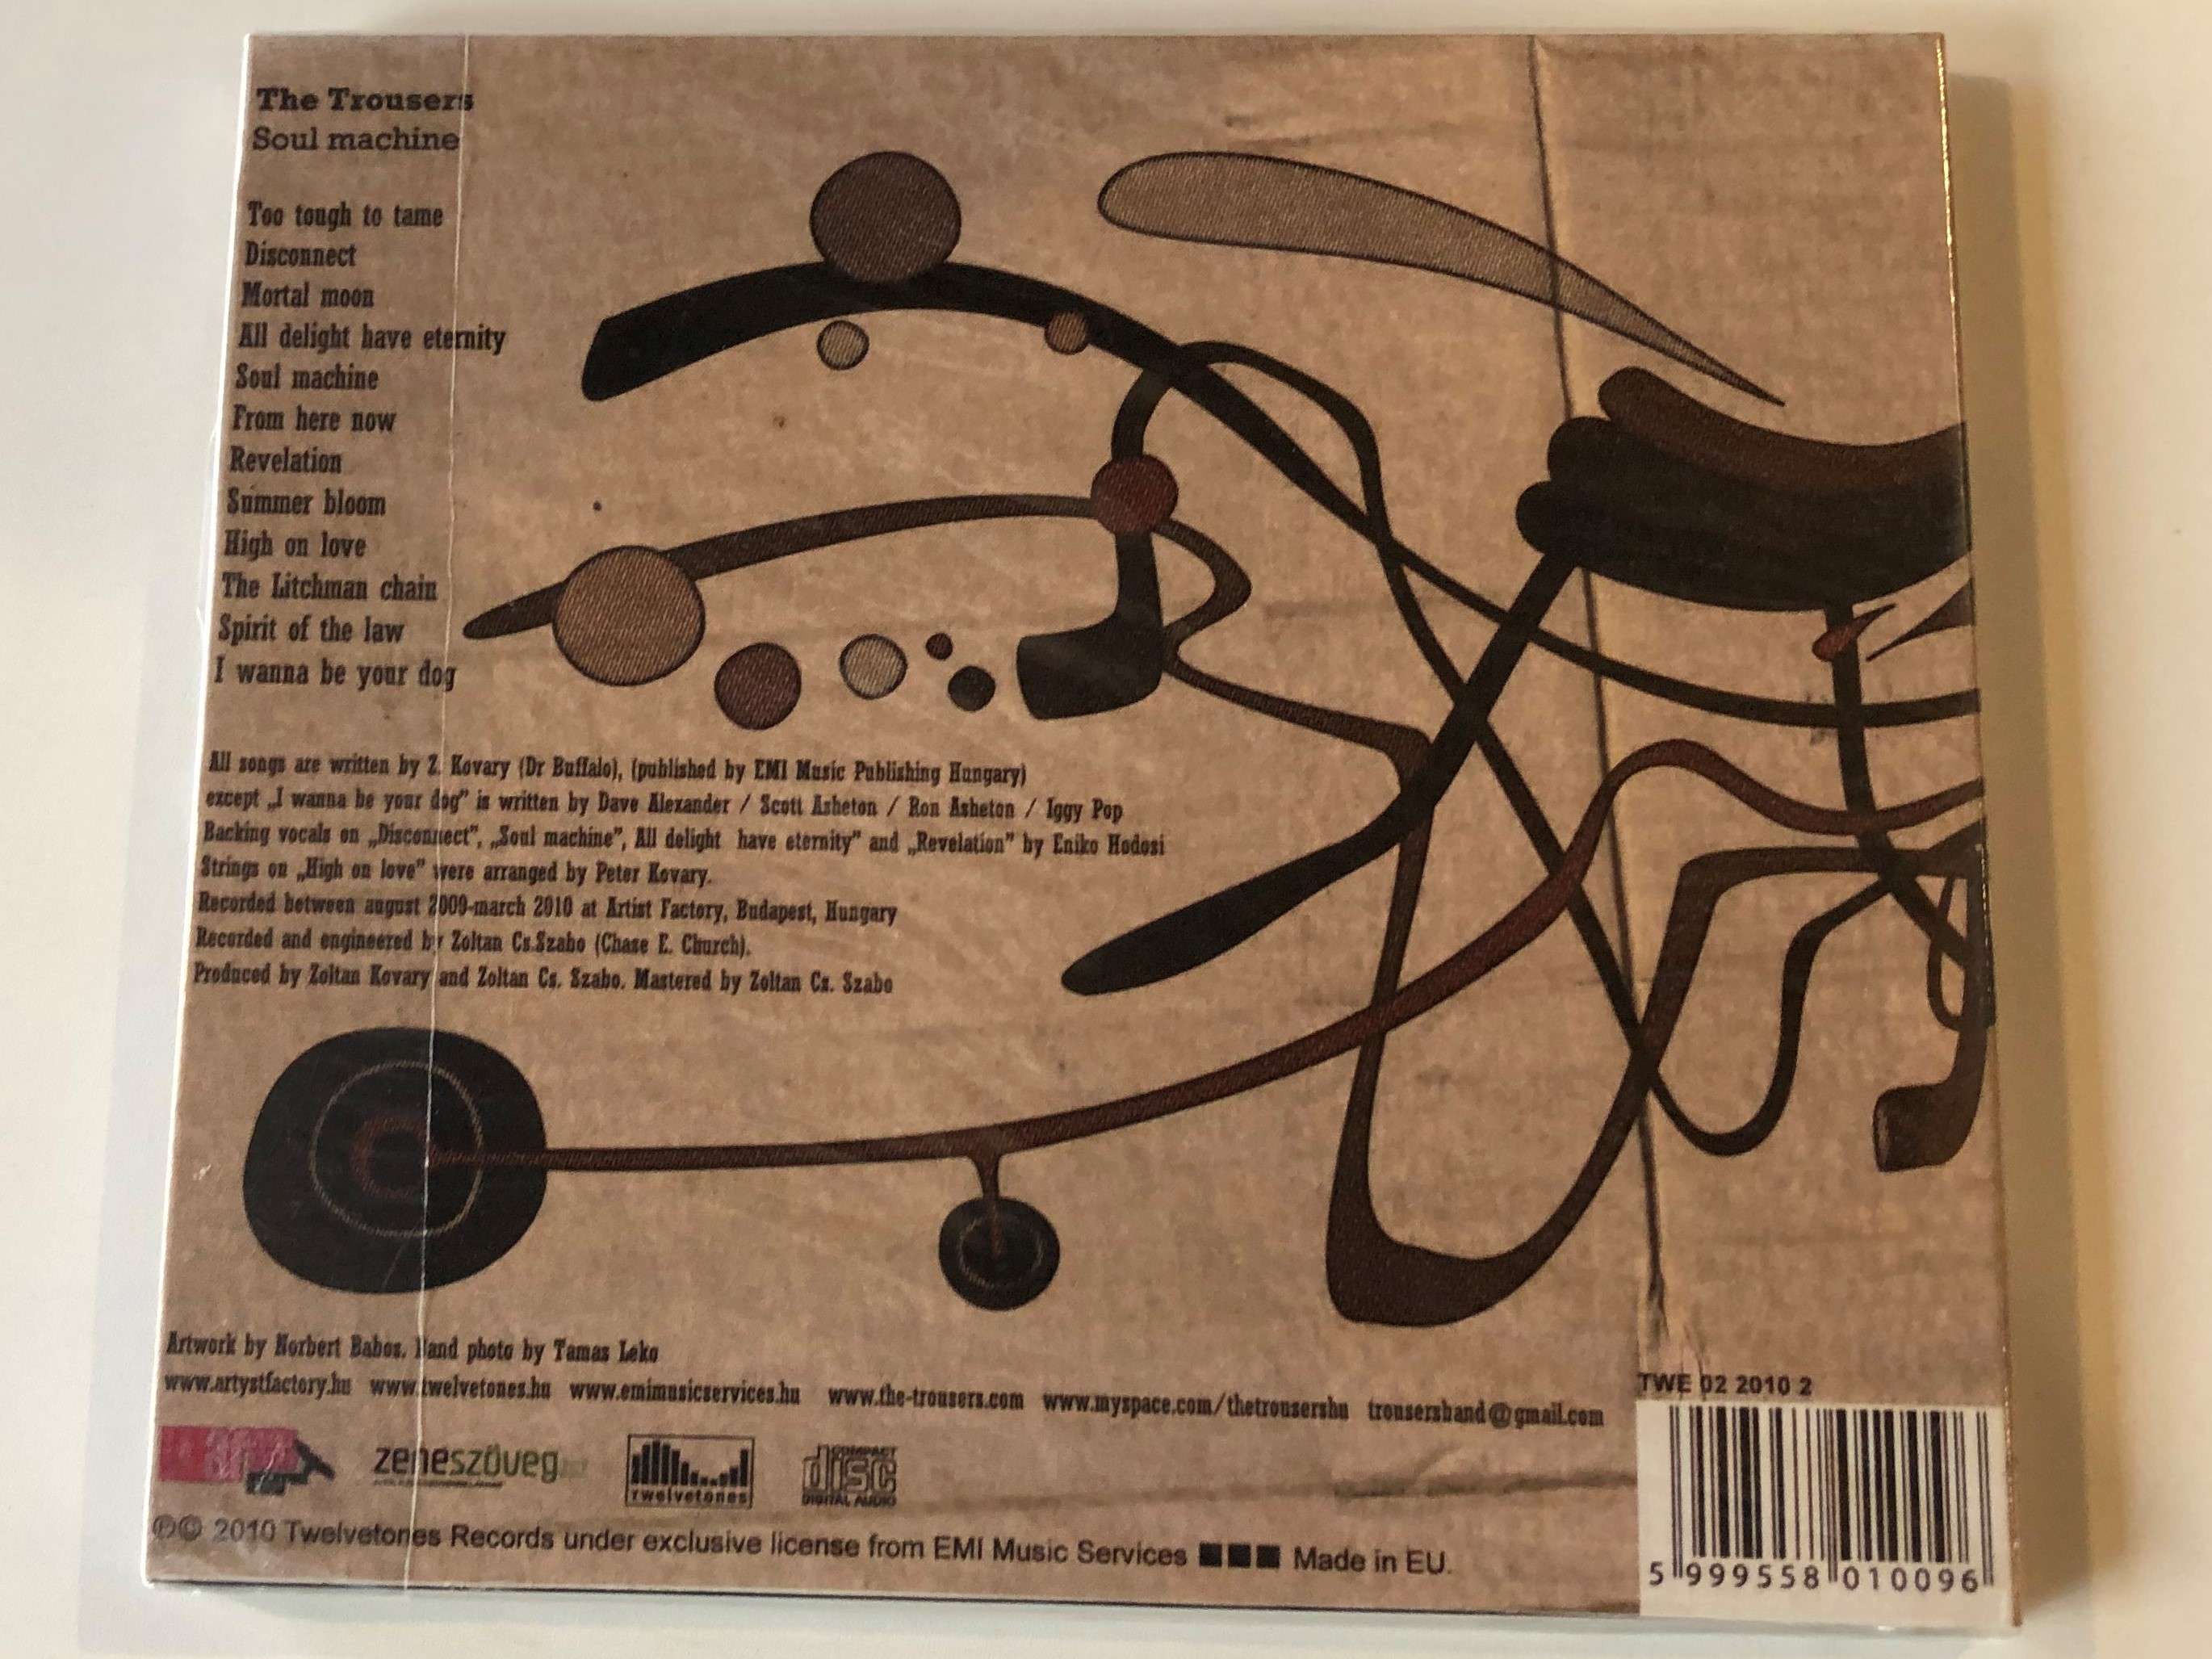 the-trousers-soul-machine-twelvetones-records-audio-cd-2010-twe-02-2010-2-2-.jpg